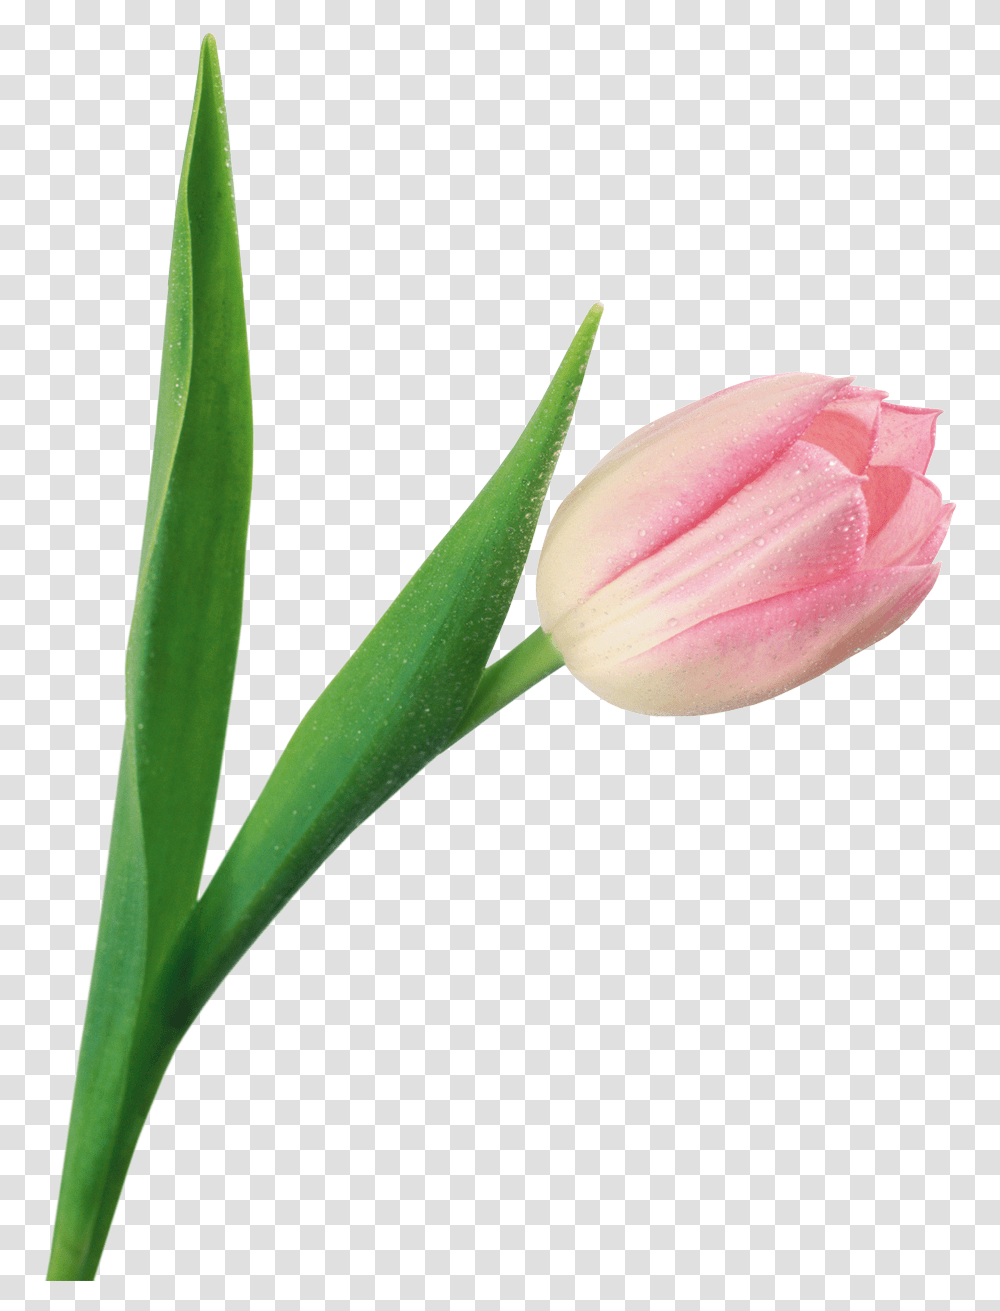 Download Tulip Image For Free, Plant, Flower, Blossom, Petal Transparent Png